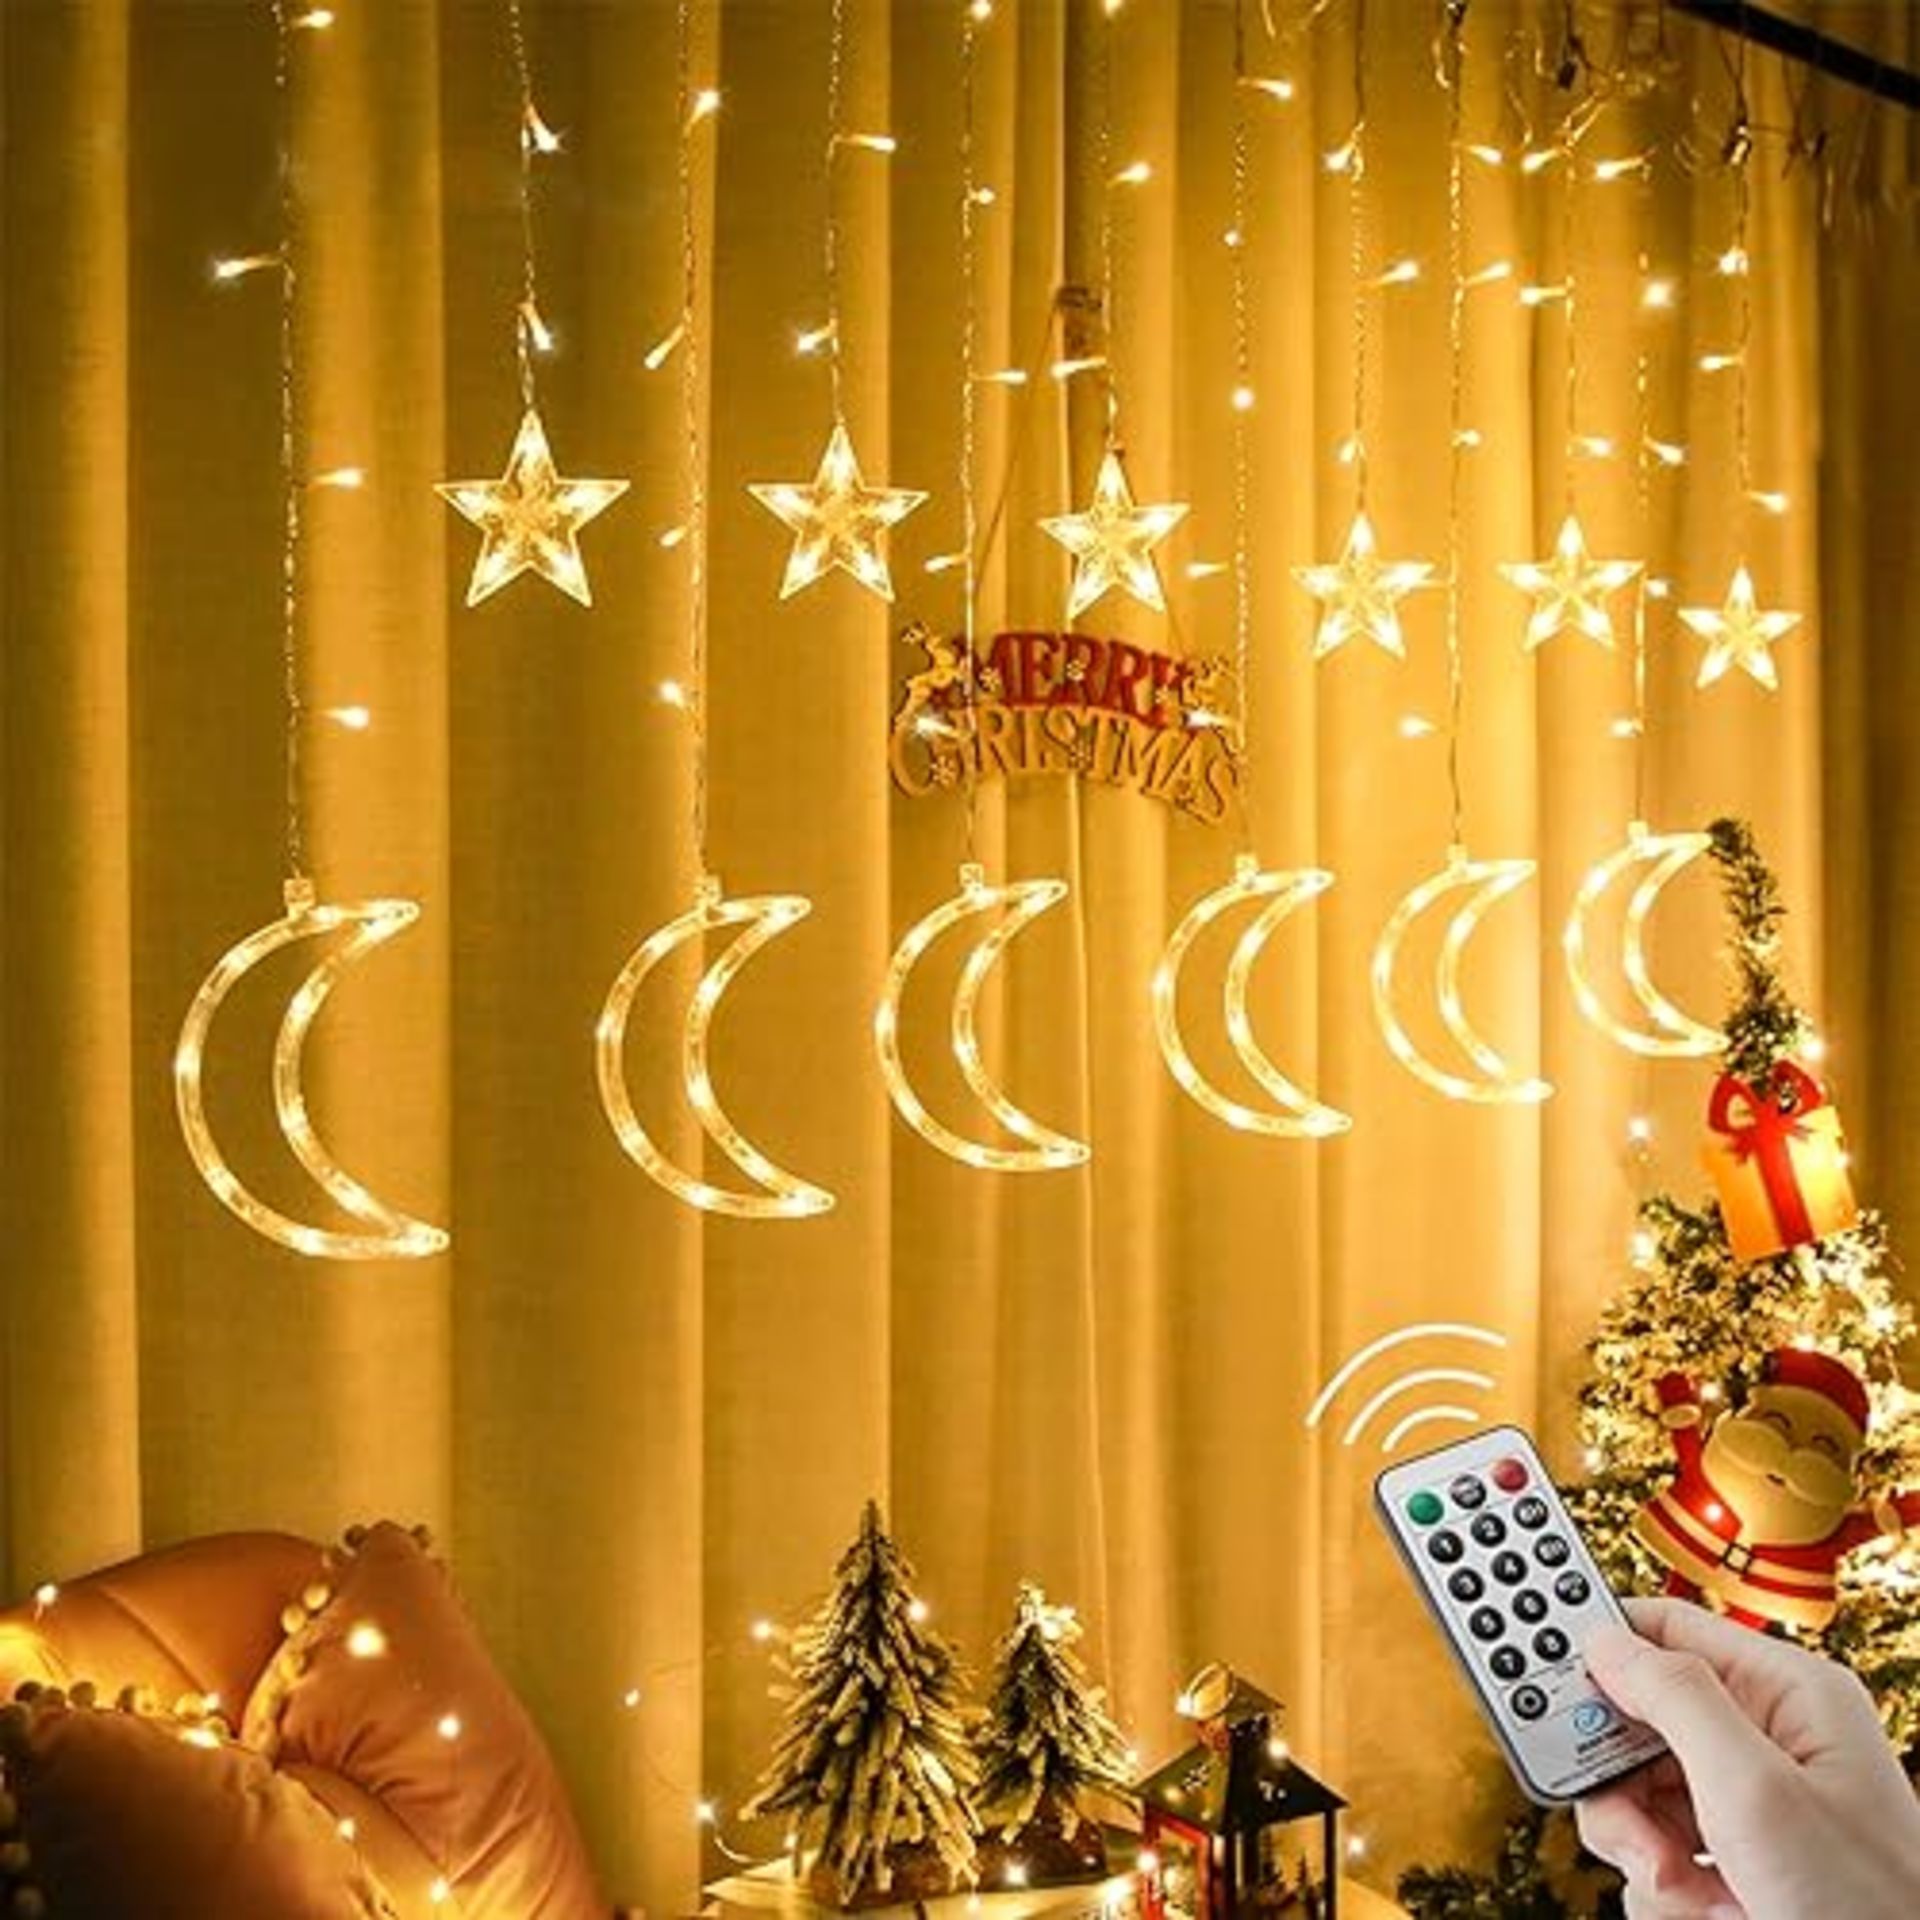 Garlocht Star Curtain Lights, 12 Star Light 138 LED Window Lights, with 8 Modes Star Fairy Lights, 